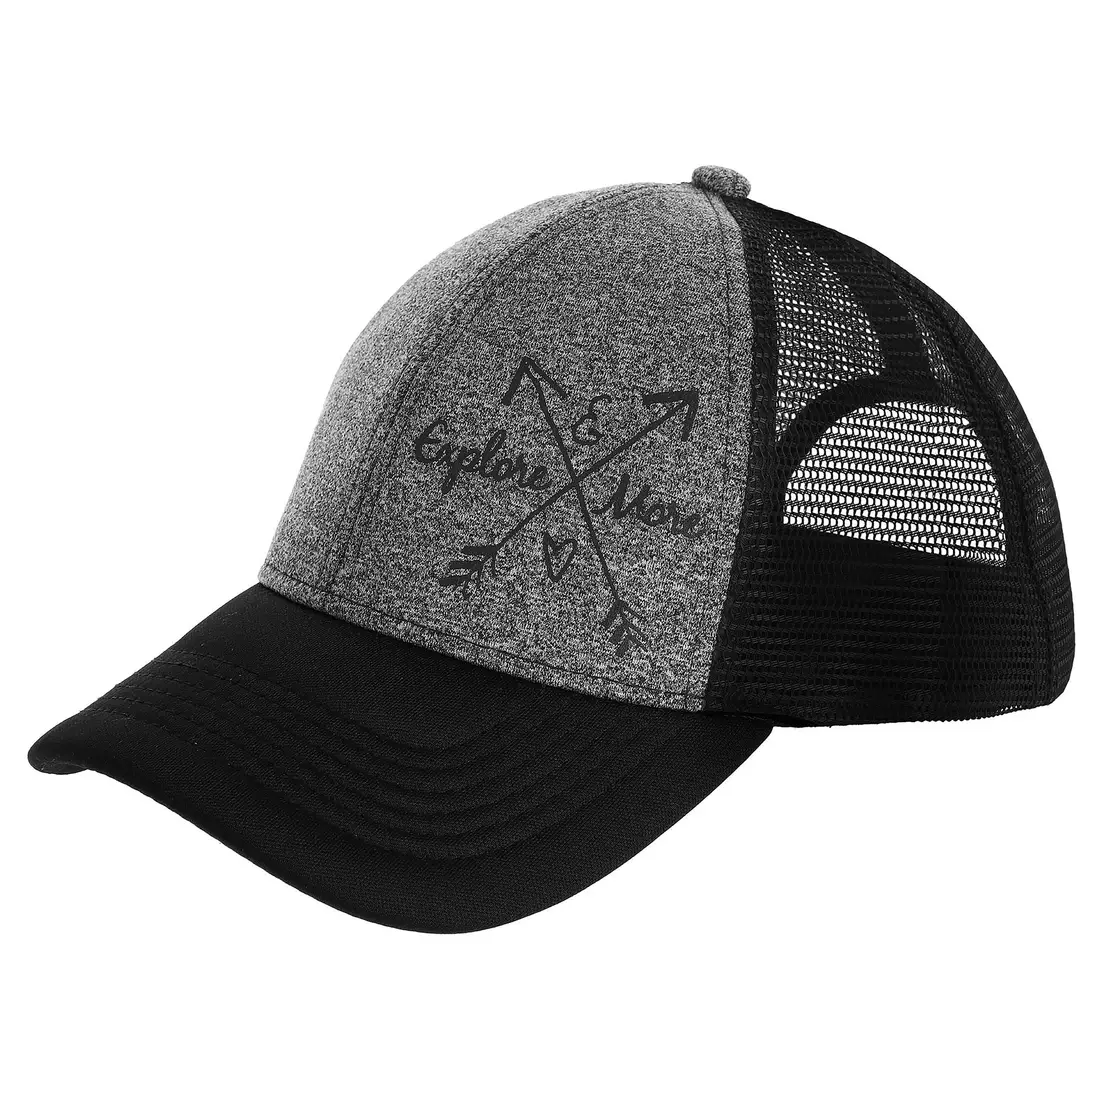 Viking Nevada Outdoor women's baseball cap, black and gray